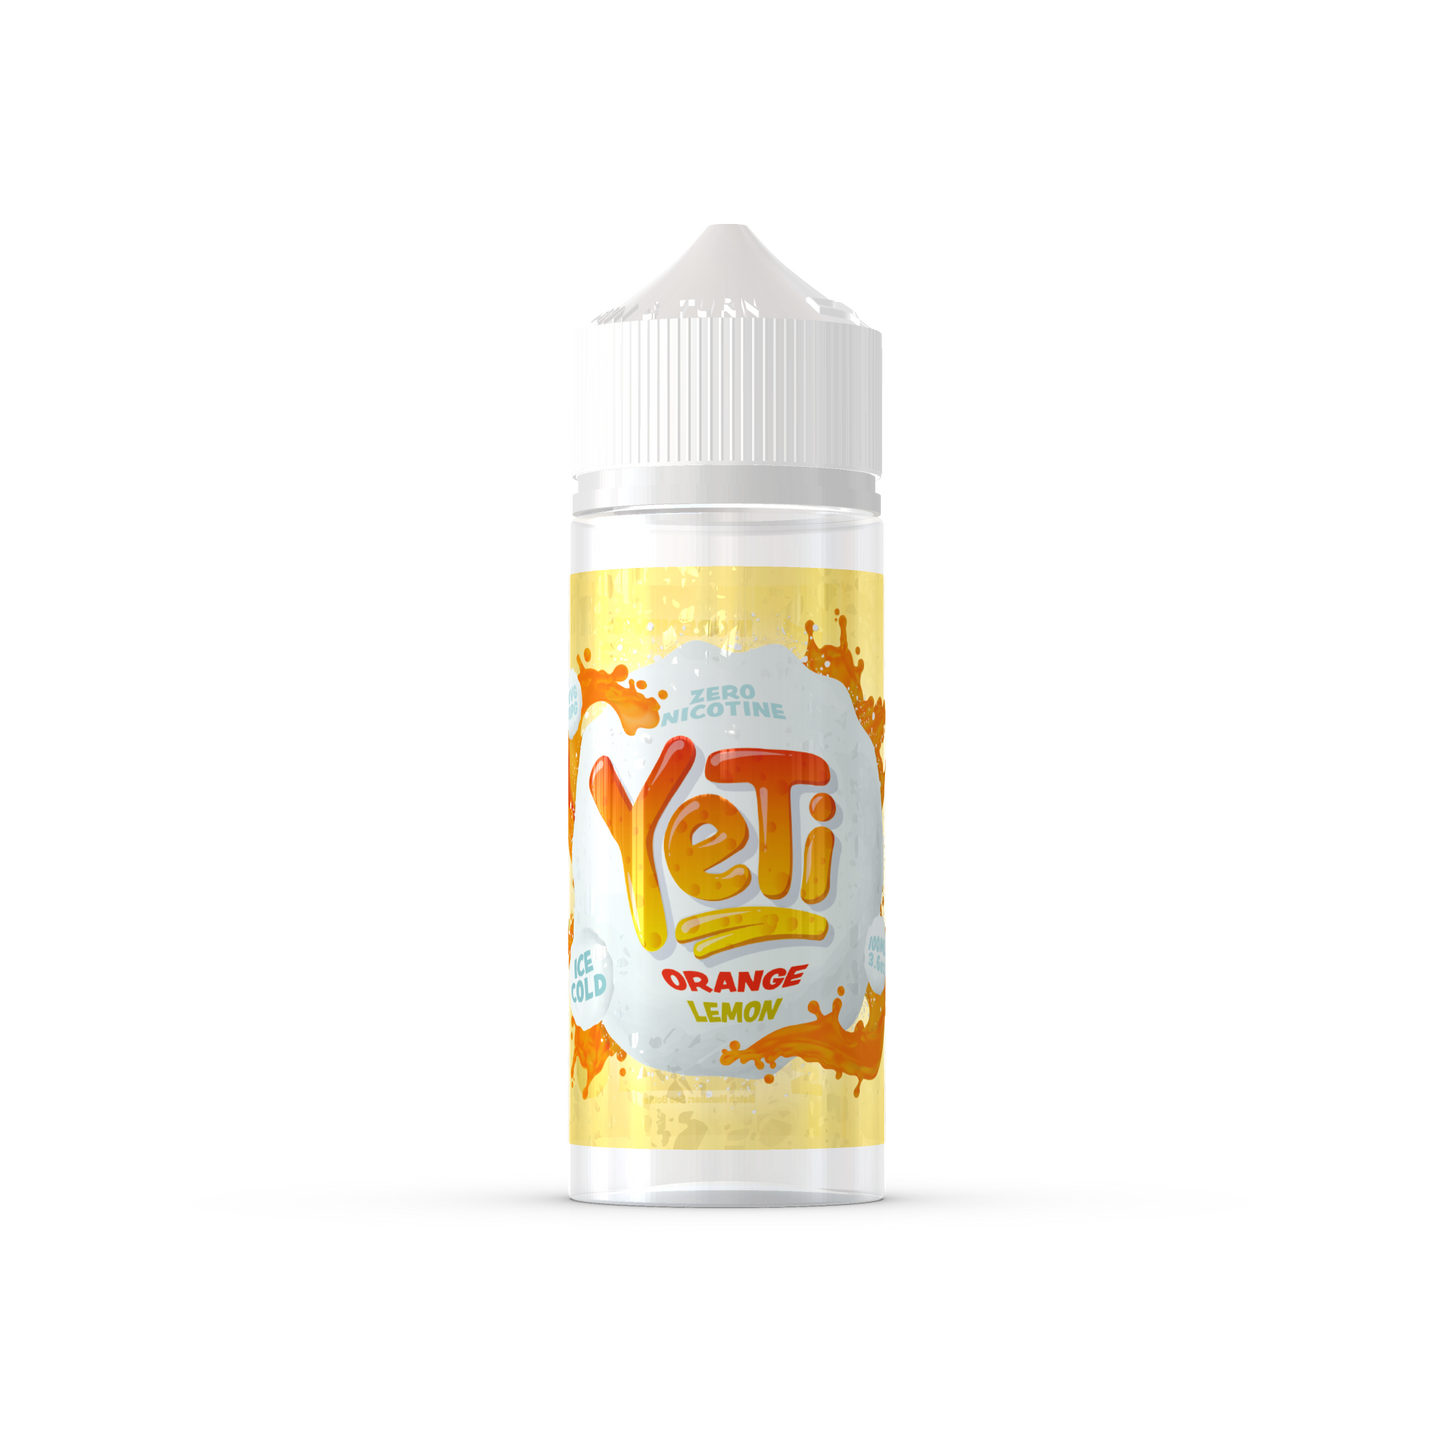 YeTi - Orange Lemon 100ml